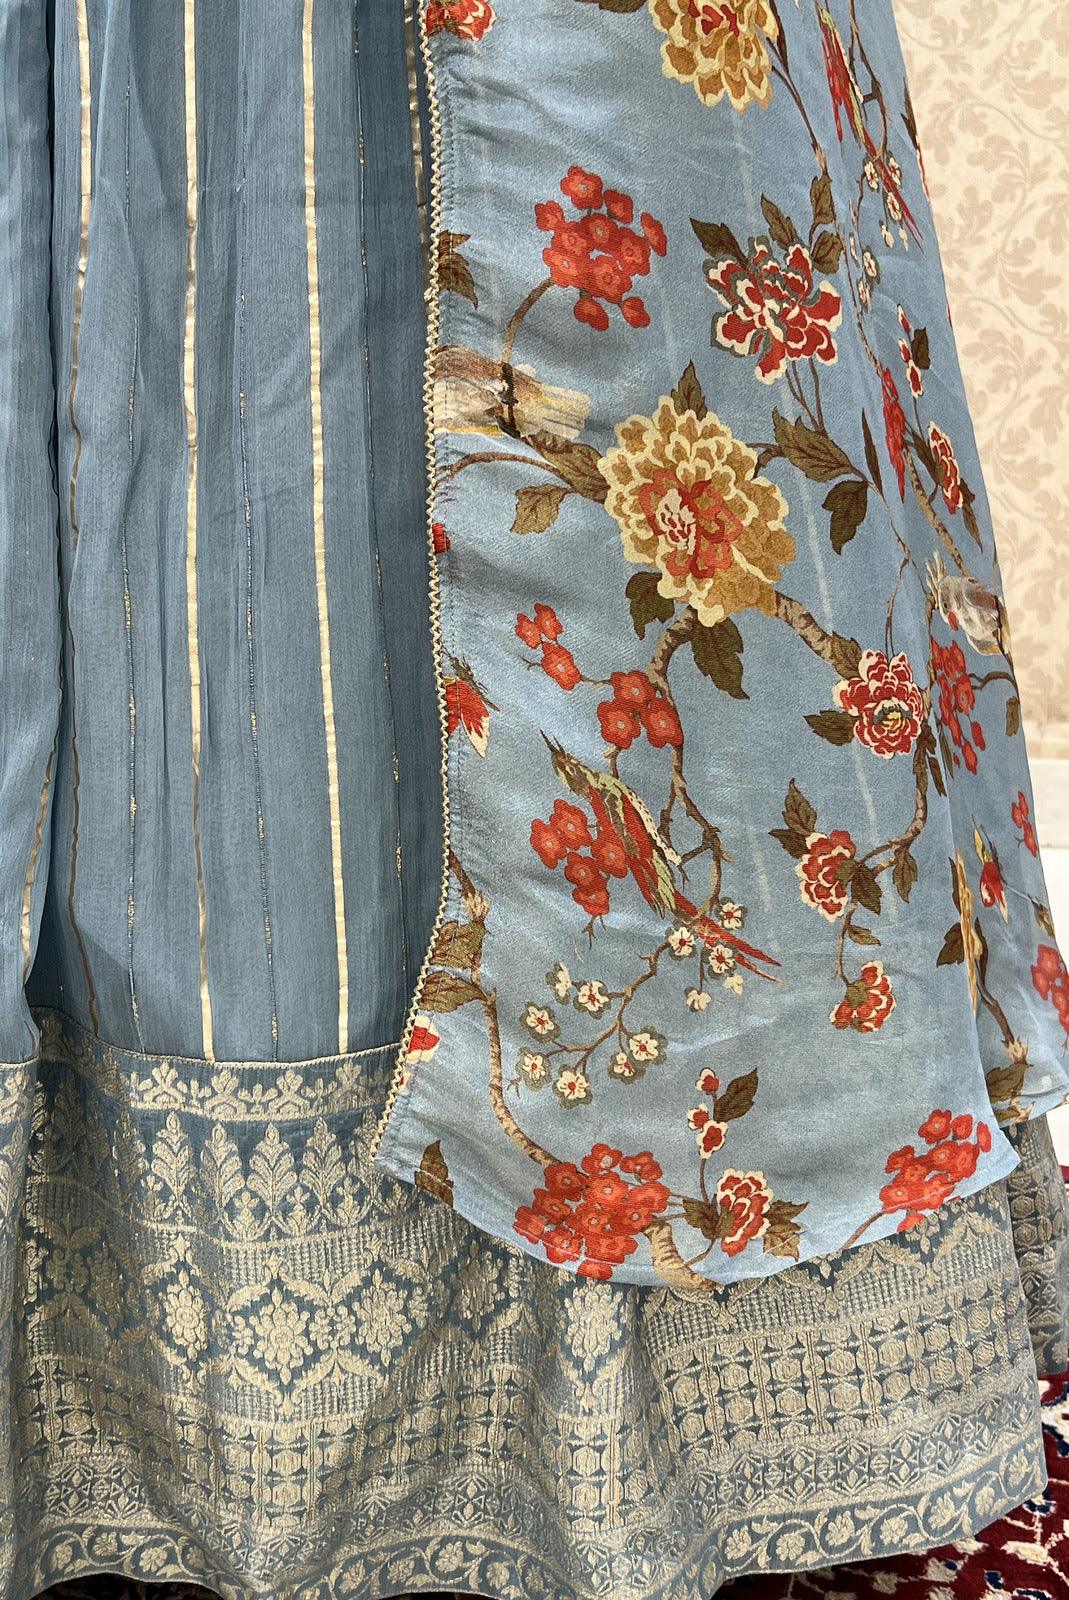 Electric Blue Banaras work with Floral Print Long Overcoat Styled Crop Top Lehenga - Seasons Chennai